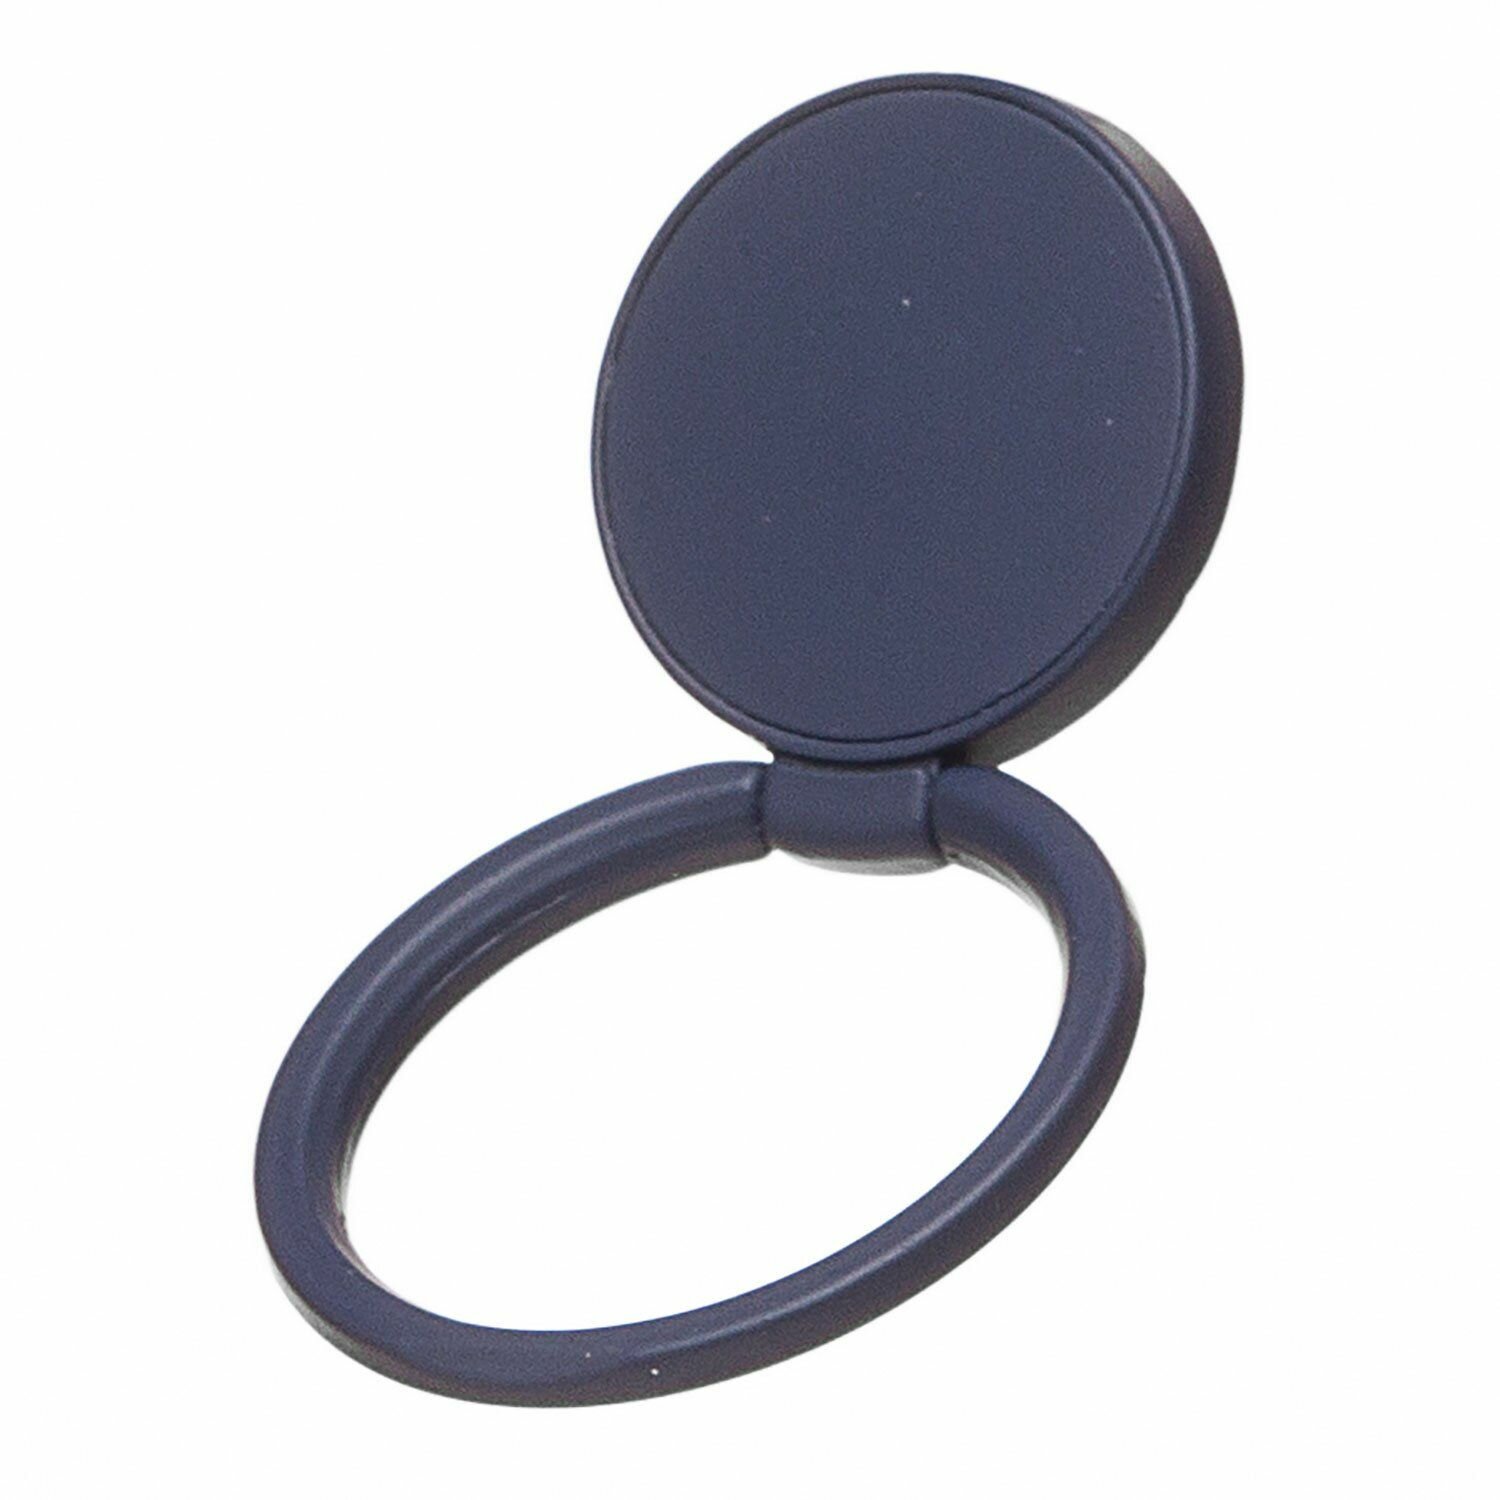 Держатель для телефона Popsockets PS61, кольцо на палец, синий, 1 шт